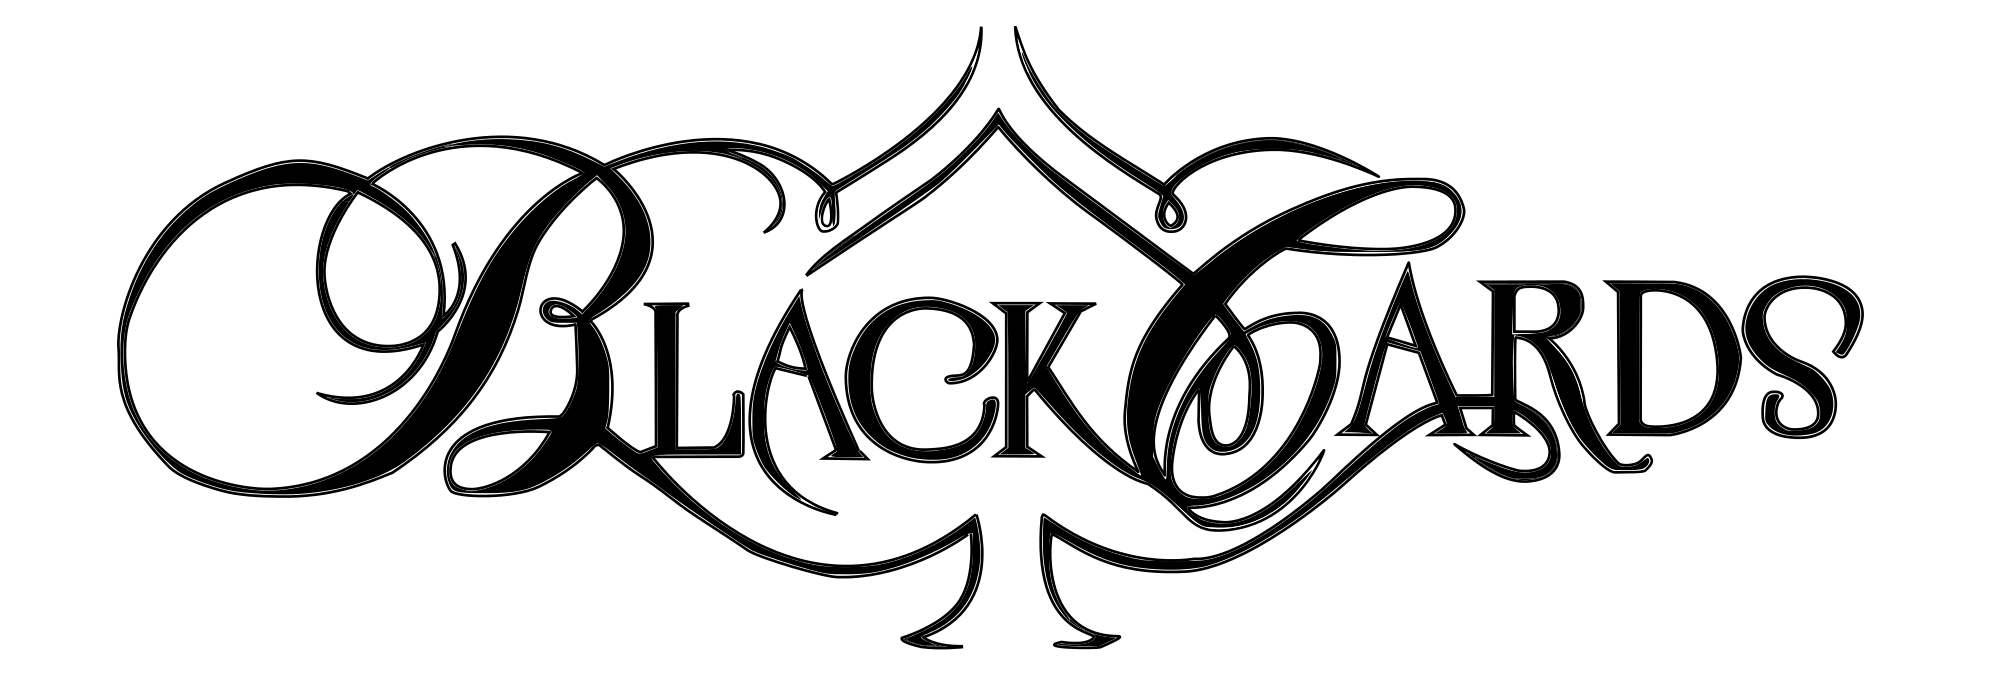 Black Cards Logo - File:Black Cards (Black).svg - Wikimedia Commons